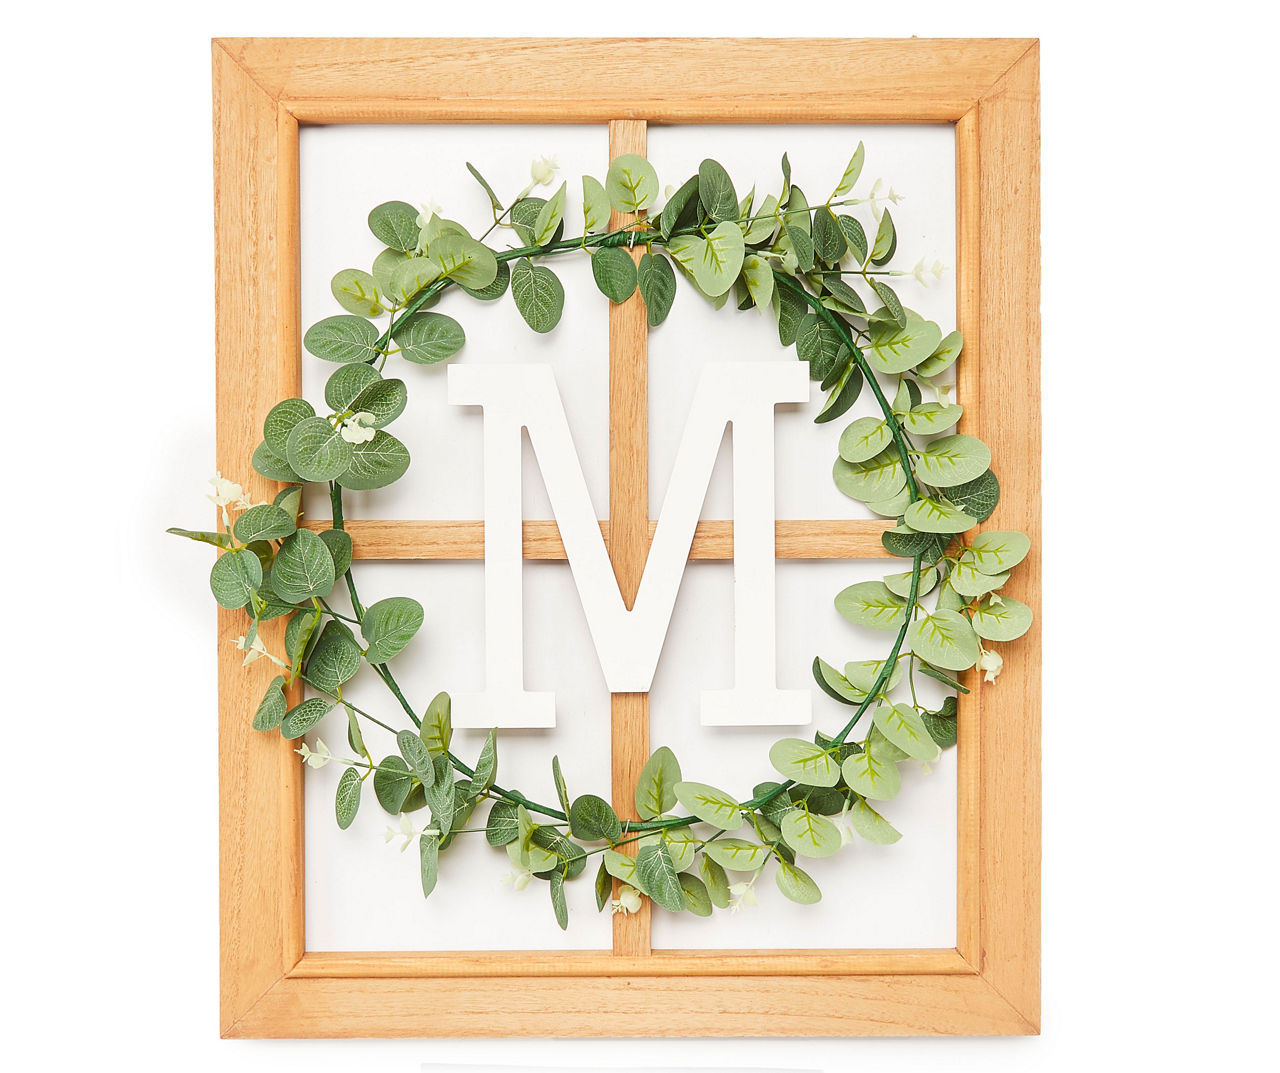 "M" Monogram Framed Windowpane Plaque with Greenery Wreath